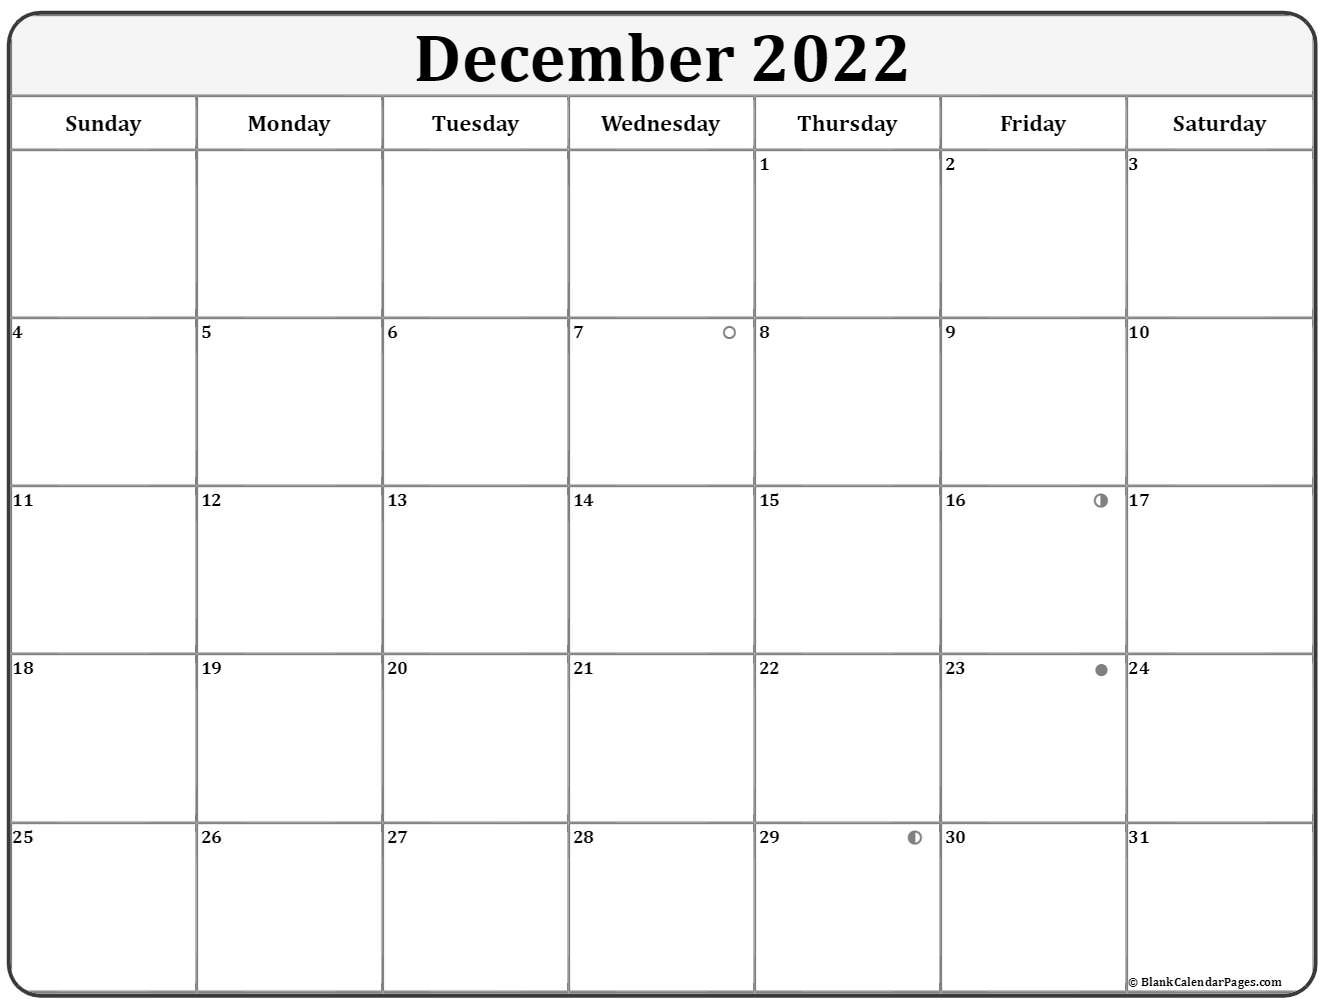 December 2022 Lunar Calendar | Moon Phase Calendar  Editable December 2022 Calendar